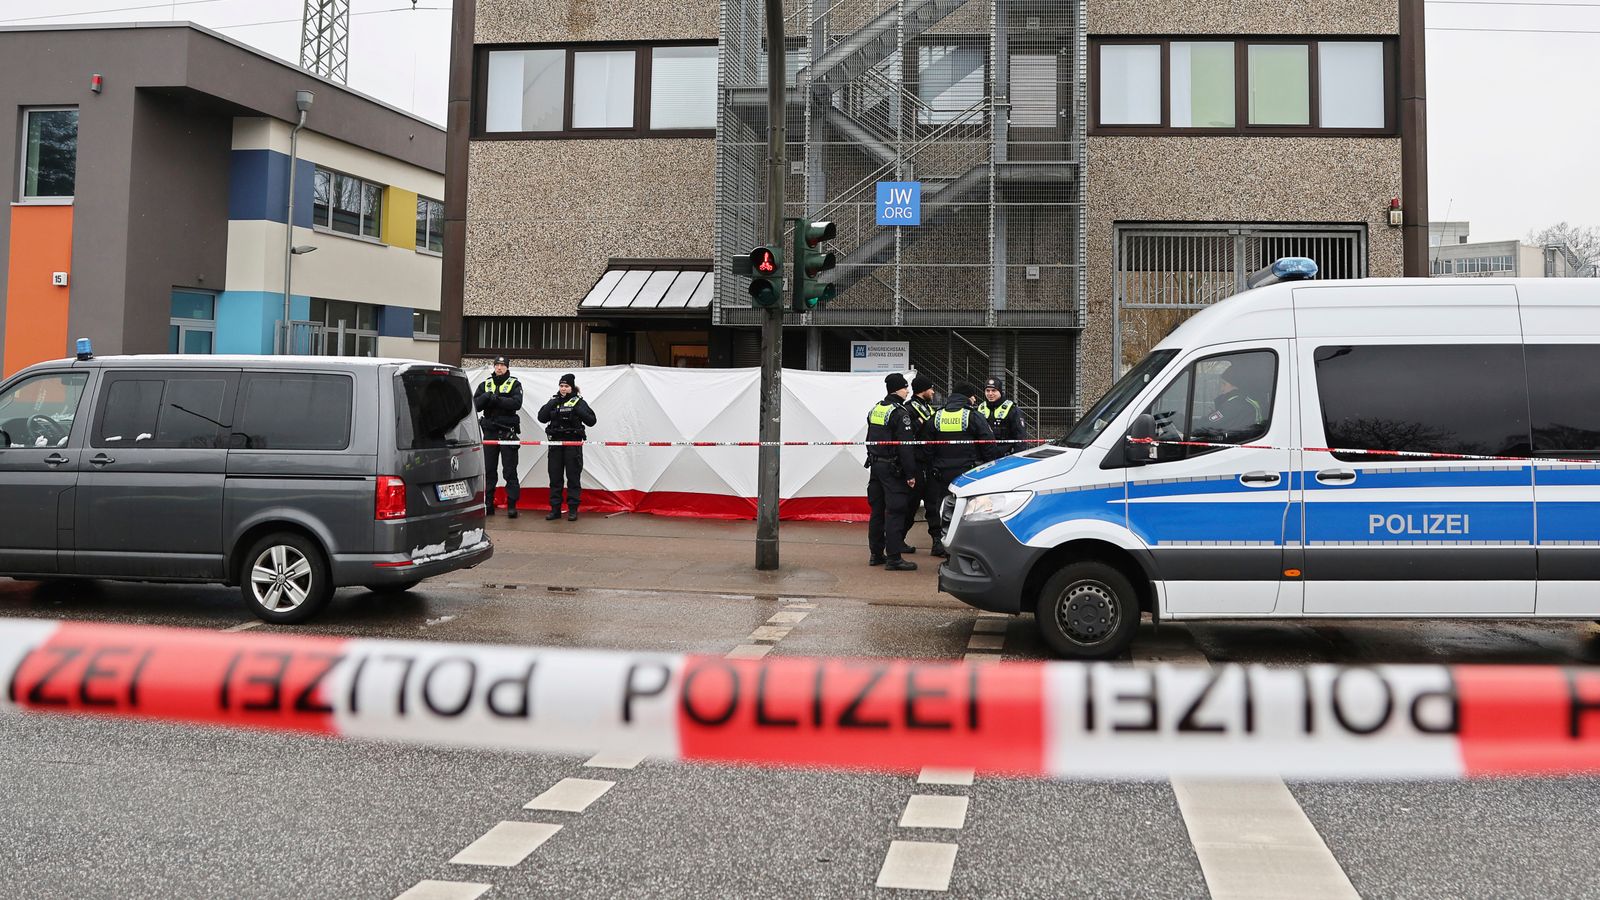 Hamburg shooting: Watch as police give details on gunman